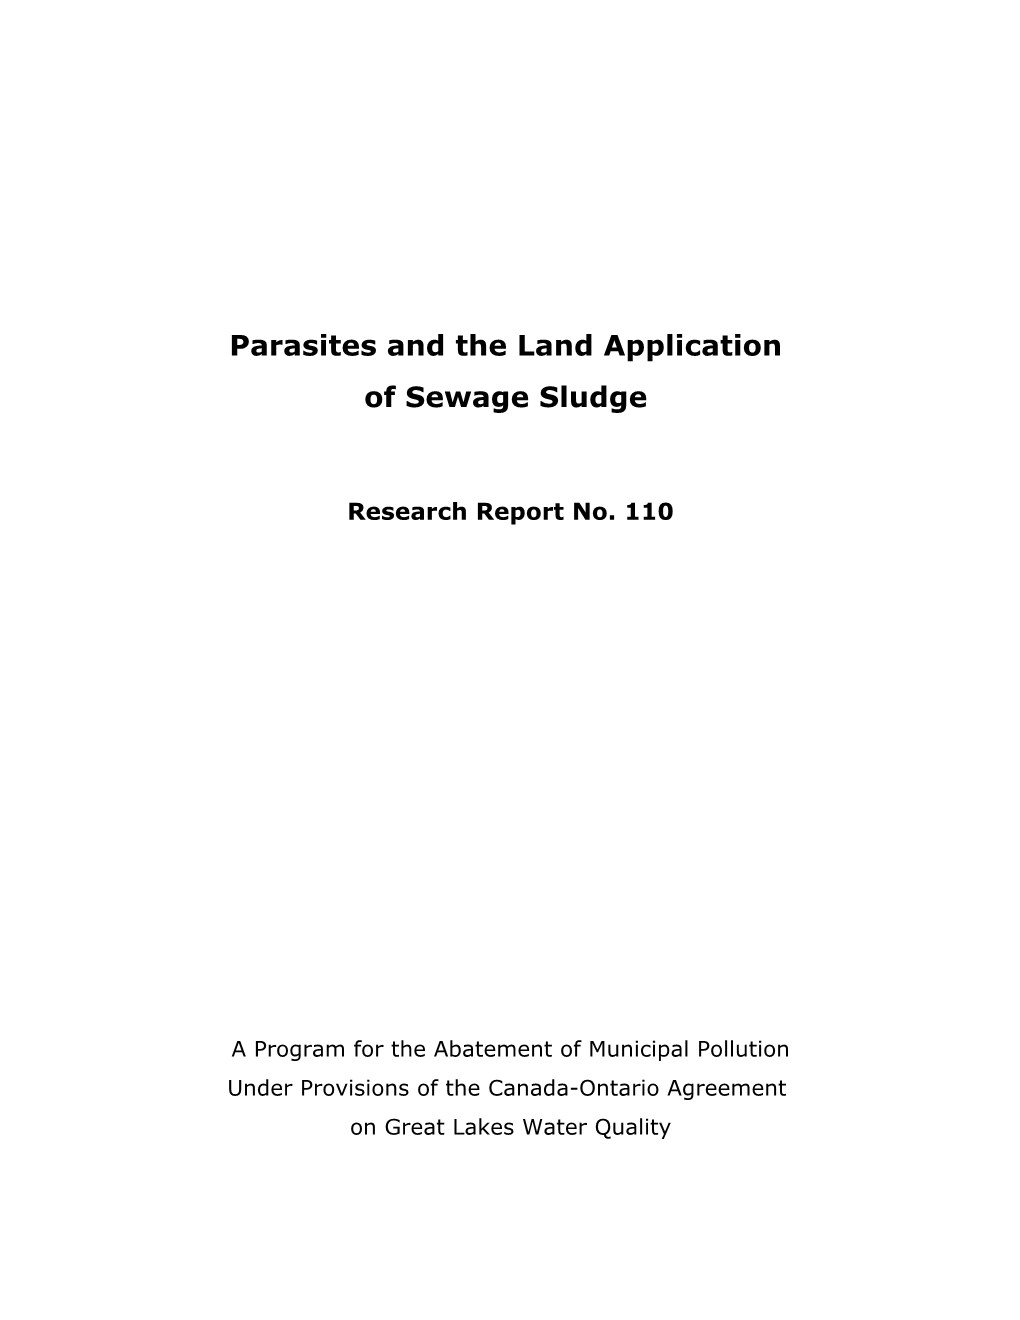 Parasites and the Land Application of Sewage Sludge. 1981